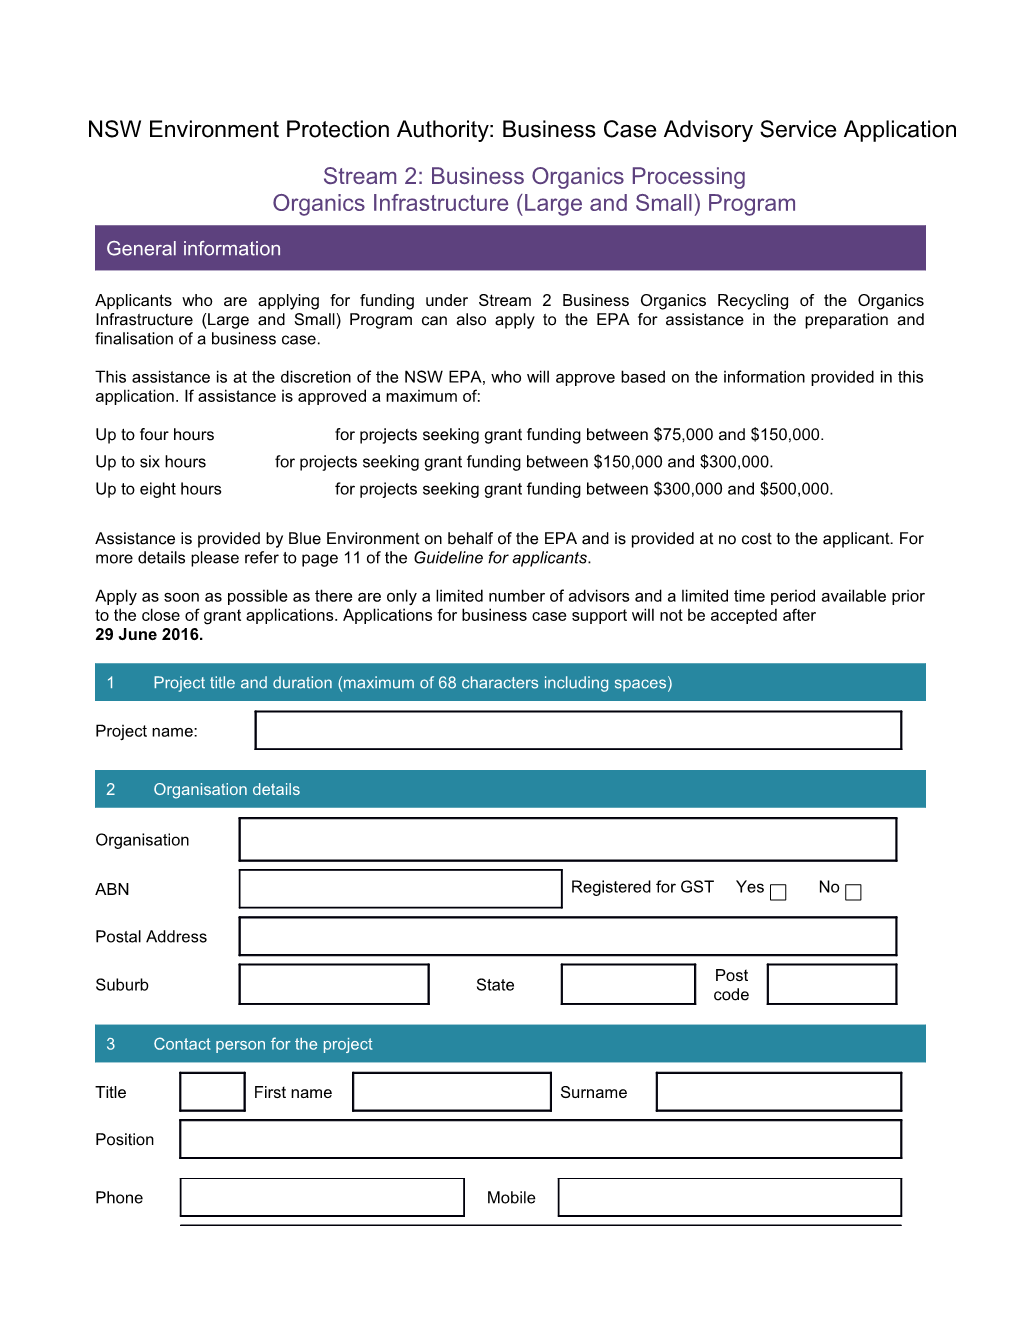 2015 Business Case Advisory Application Form - Organics Infrastructure